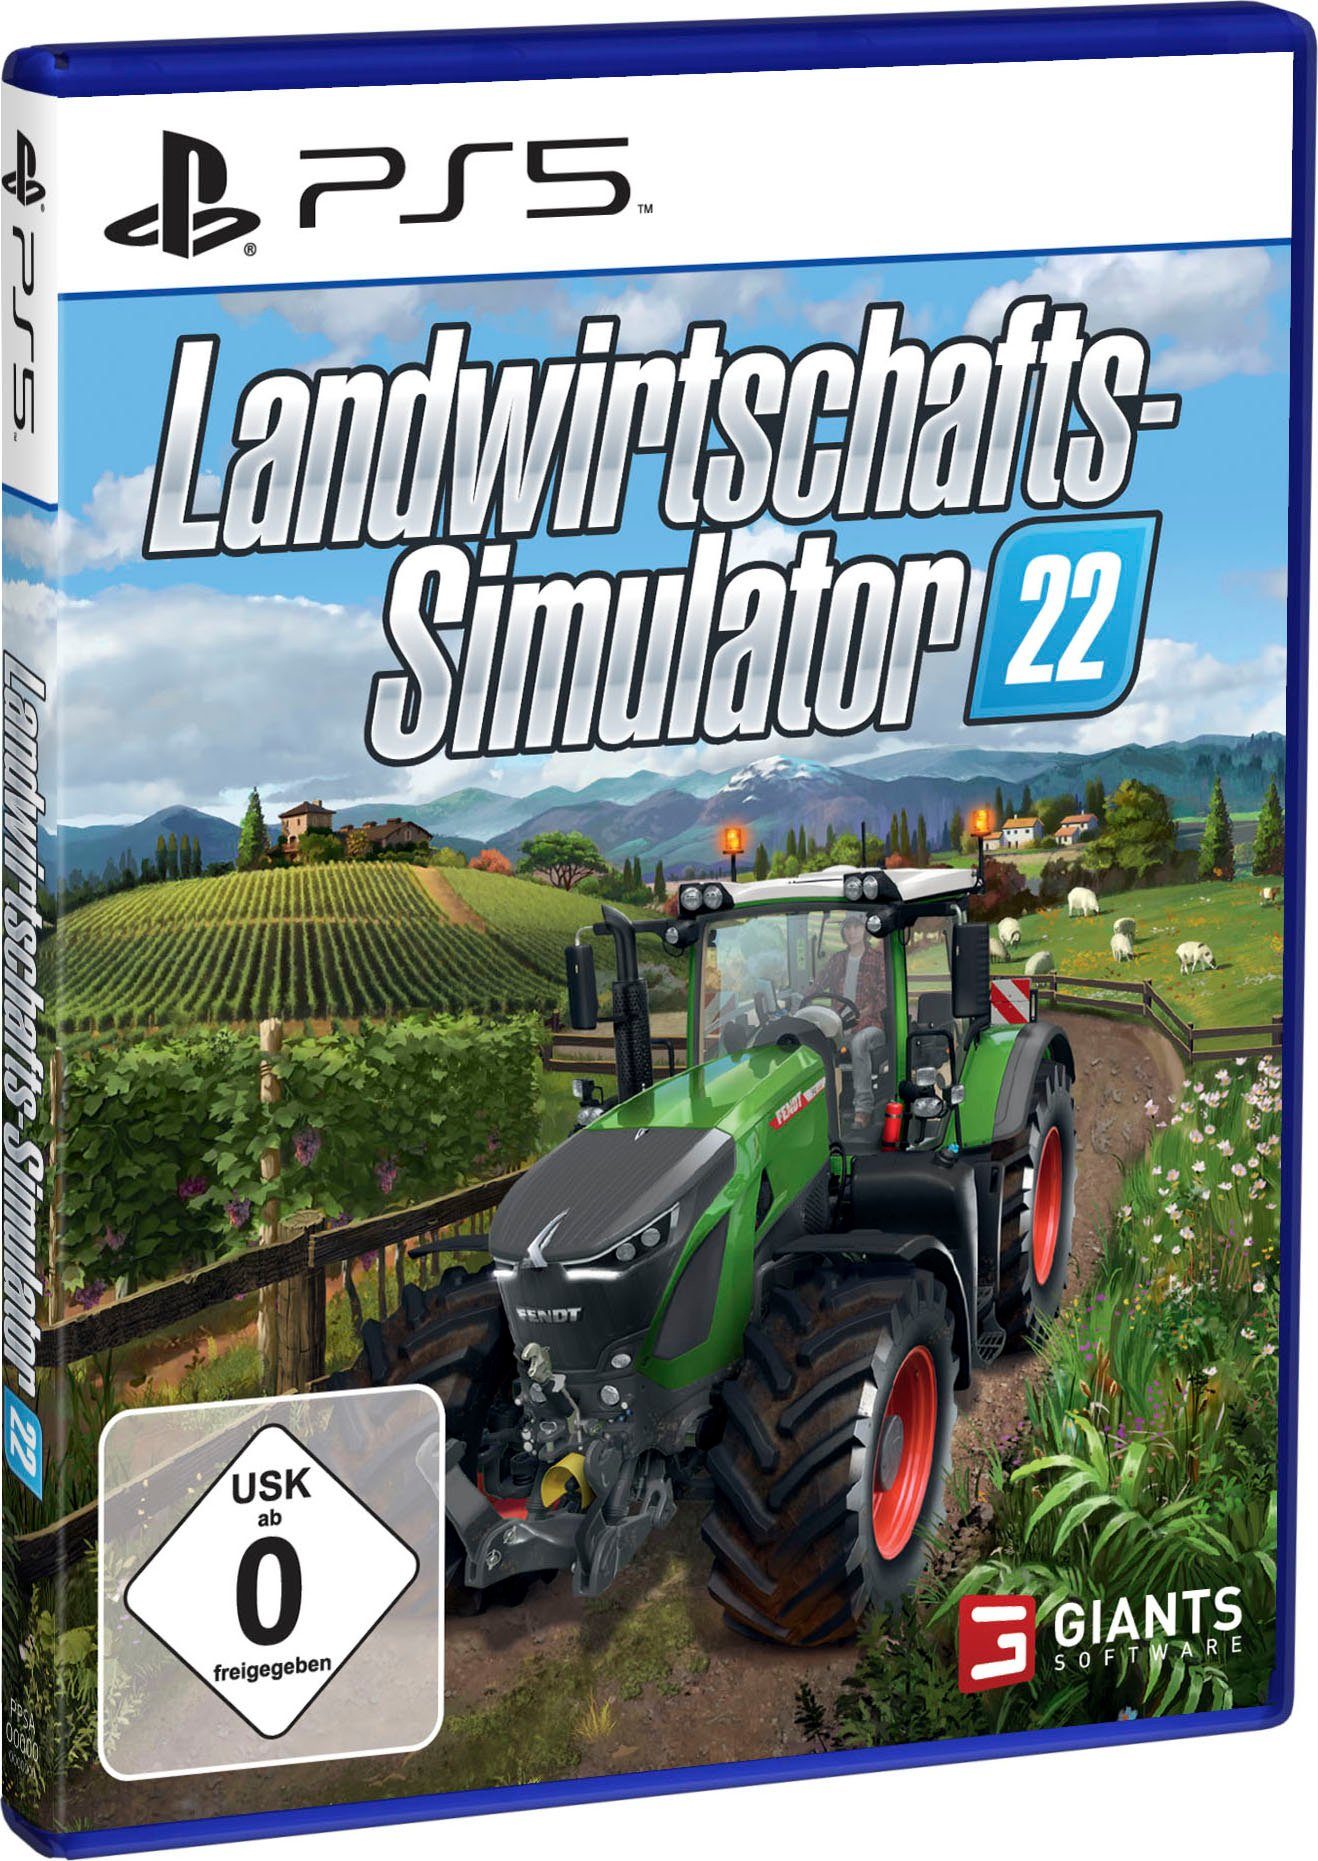 PlayStation 22 Landwirtschafts-Simulator Astragon 5